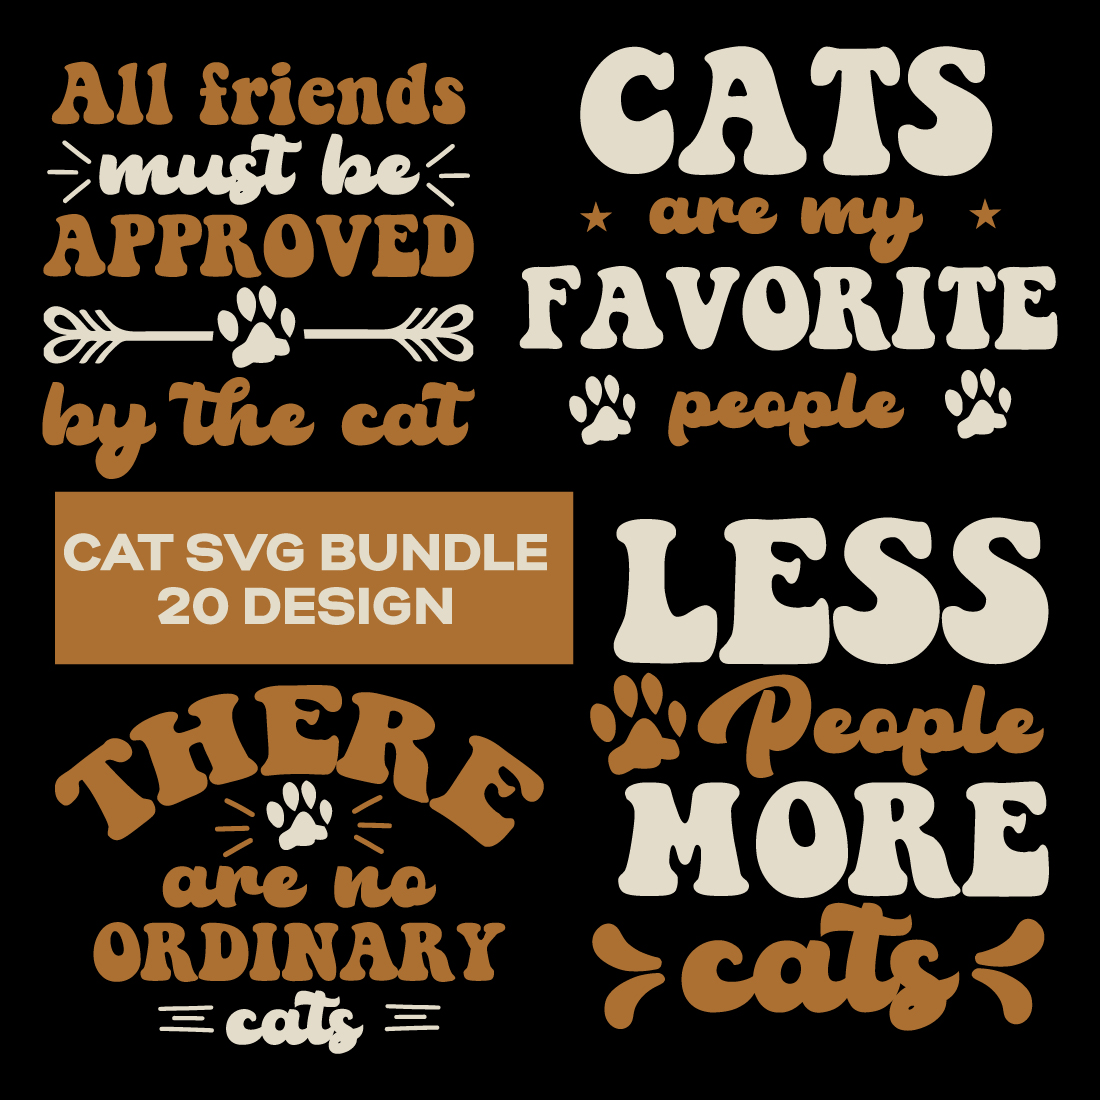 cat SVG bundle cover image.